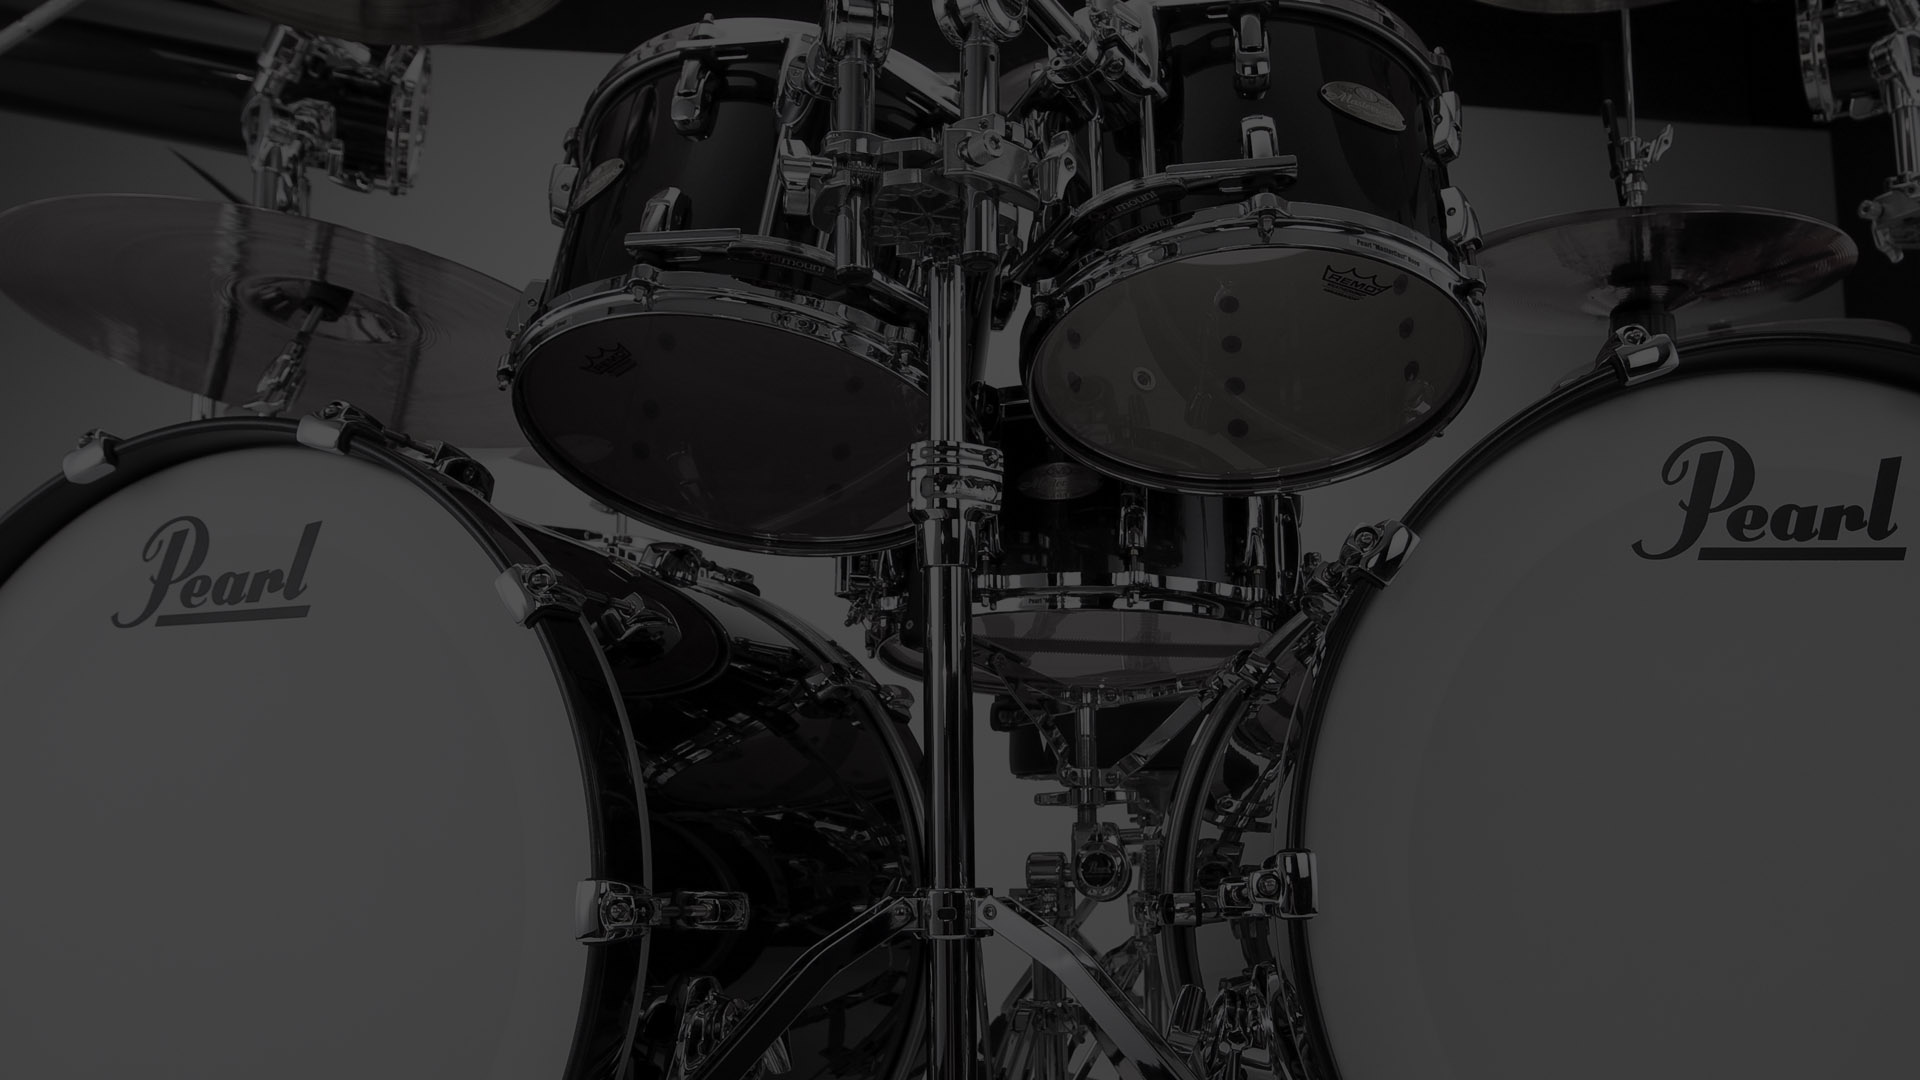 Desktop Wallpaper Pearl Drums